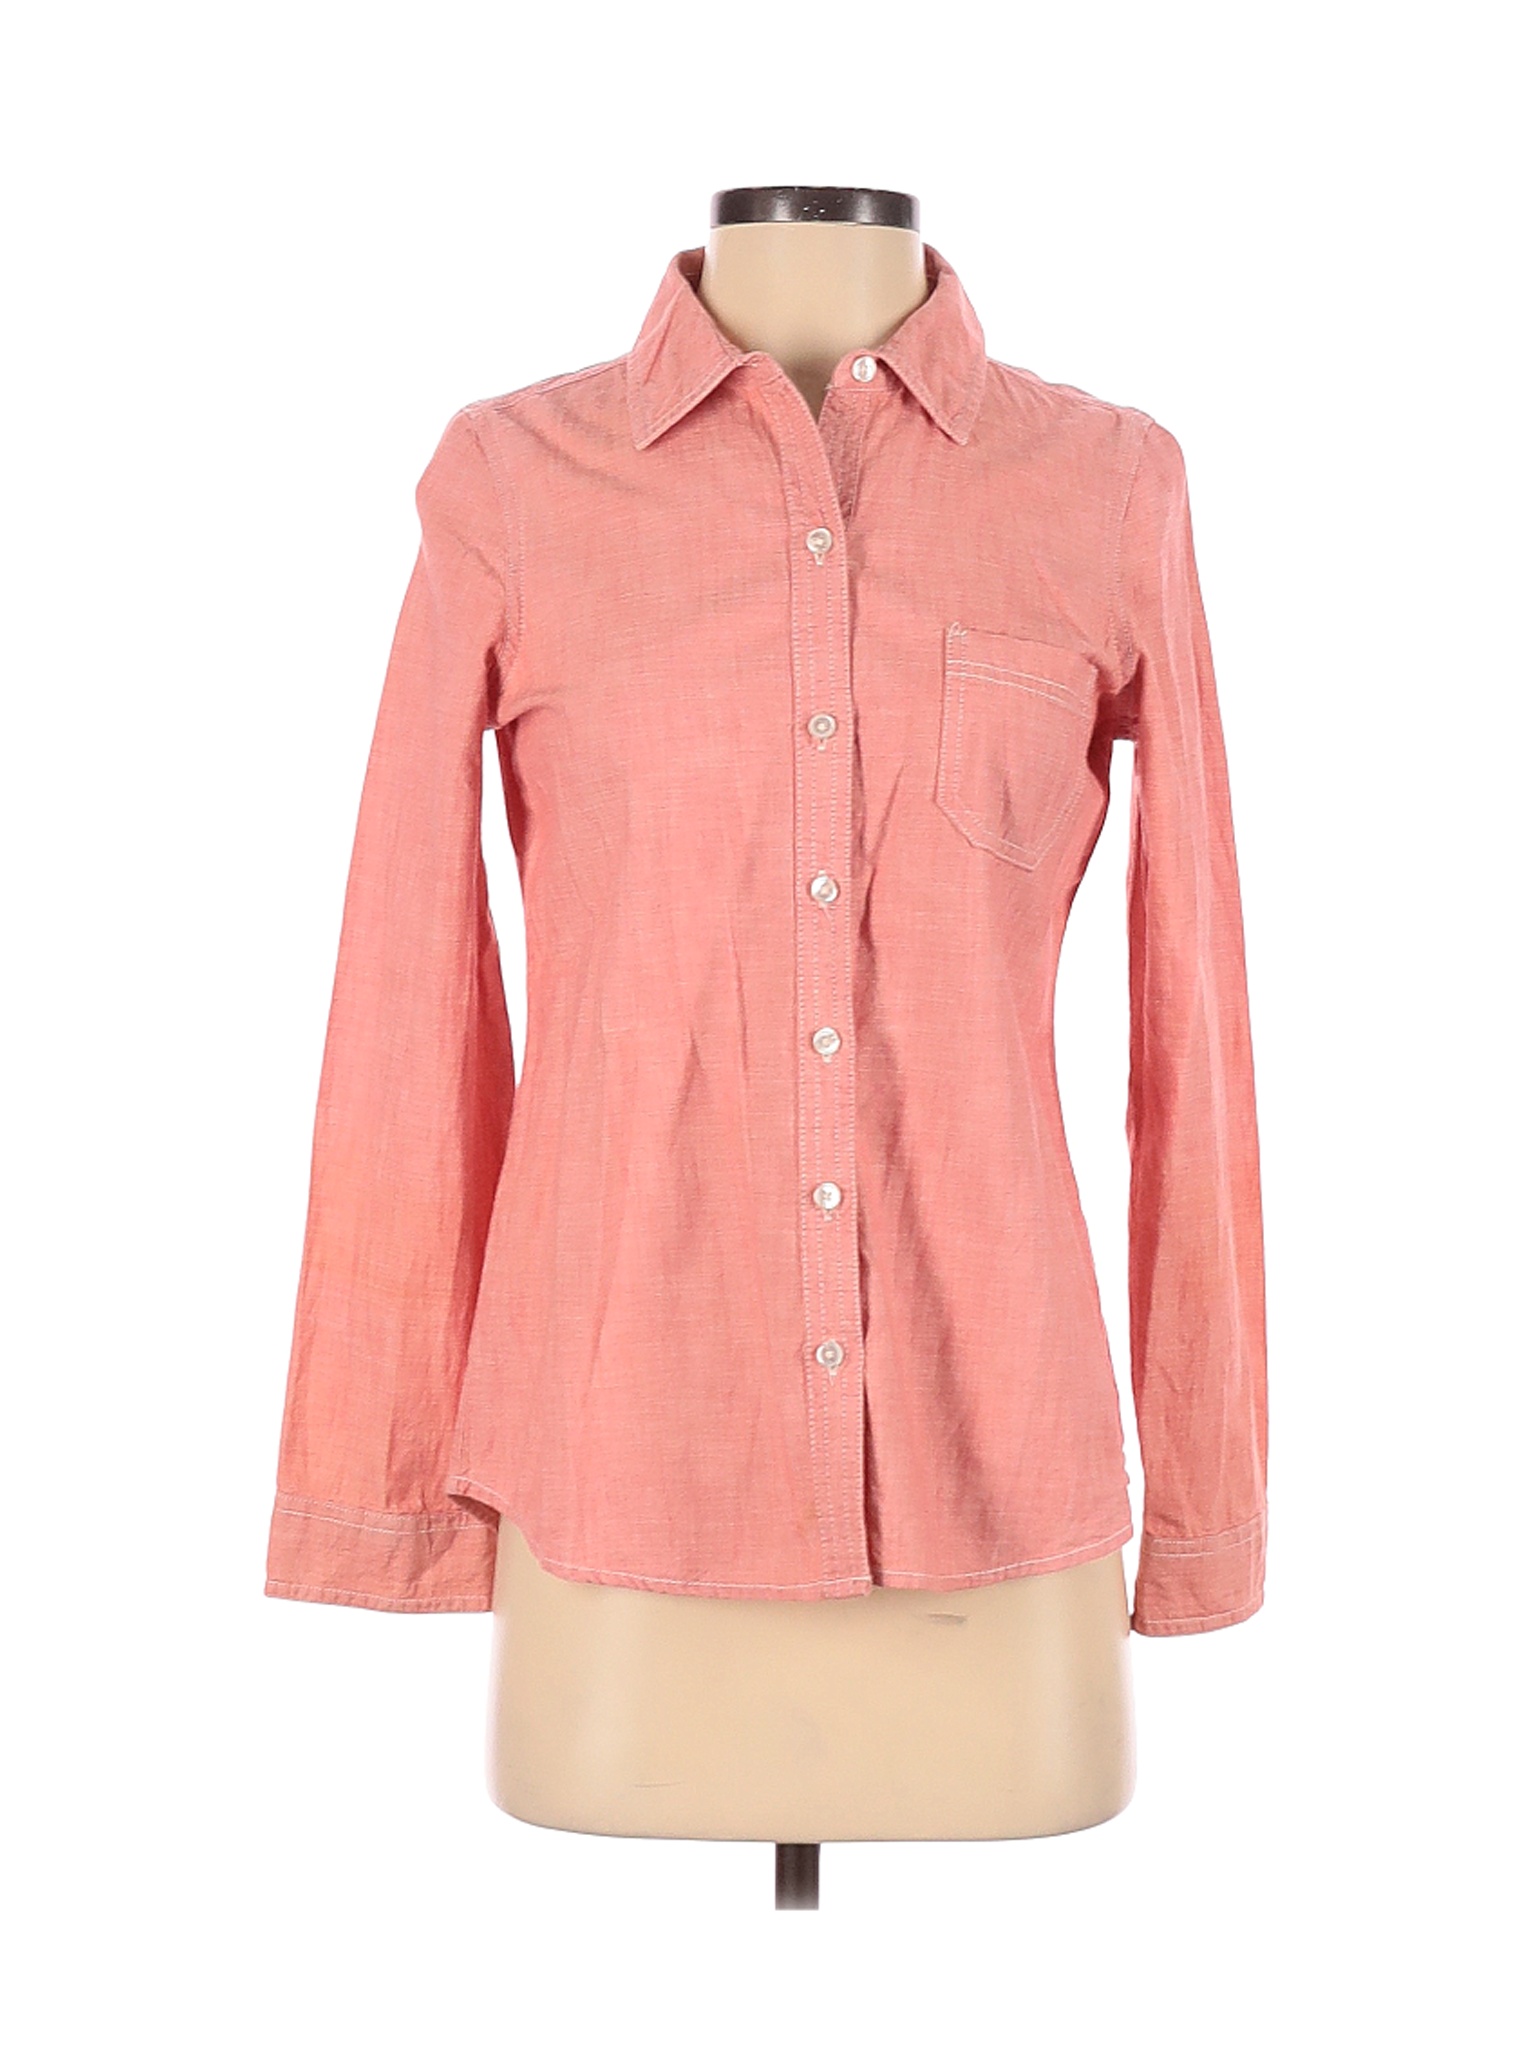 Old Navy Women Pink Long Sleeve Button-Down Shirt XS | eBay